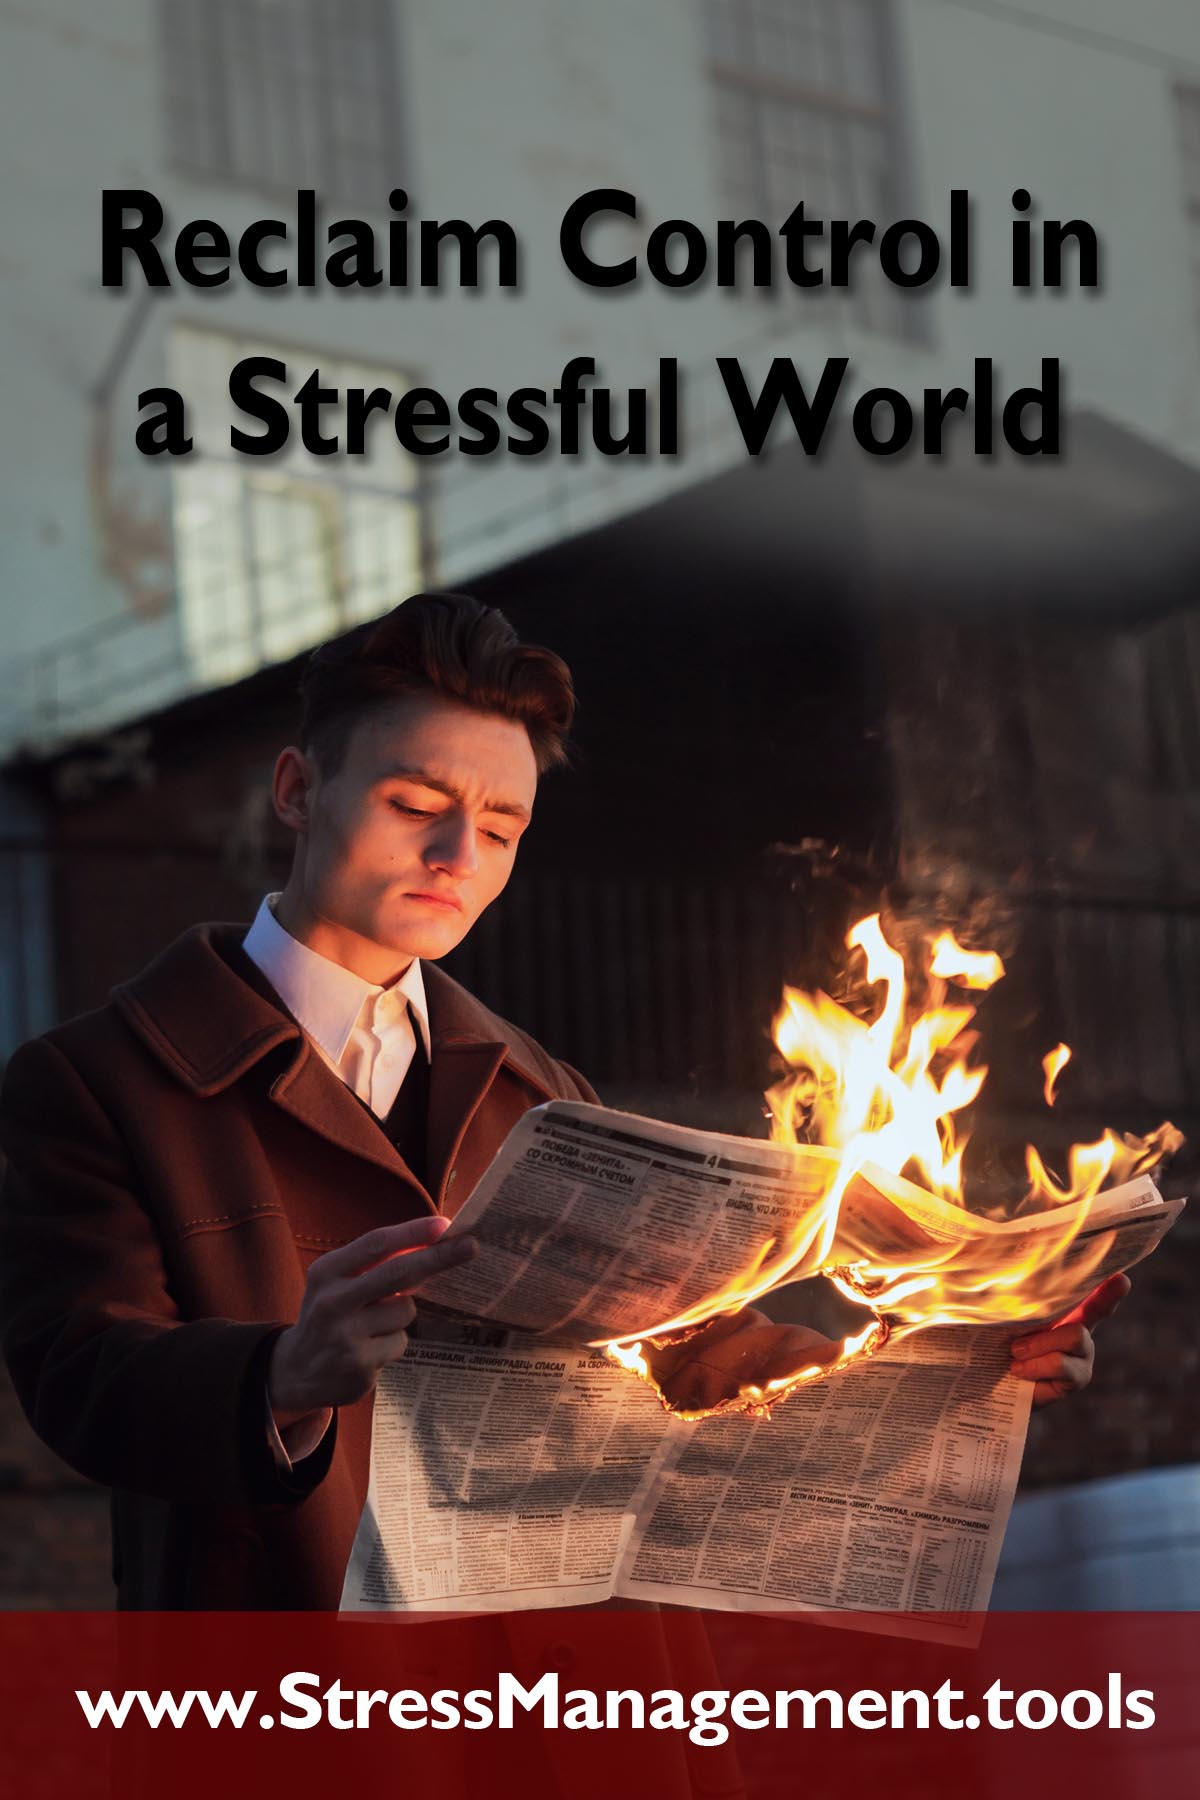 Reclaim Control in a Stressful World